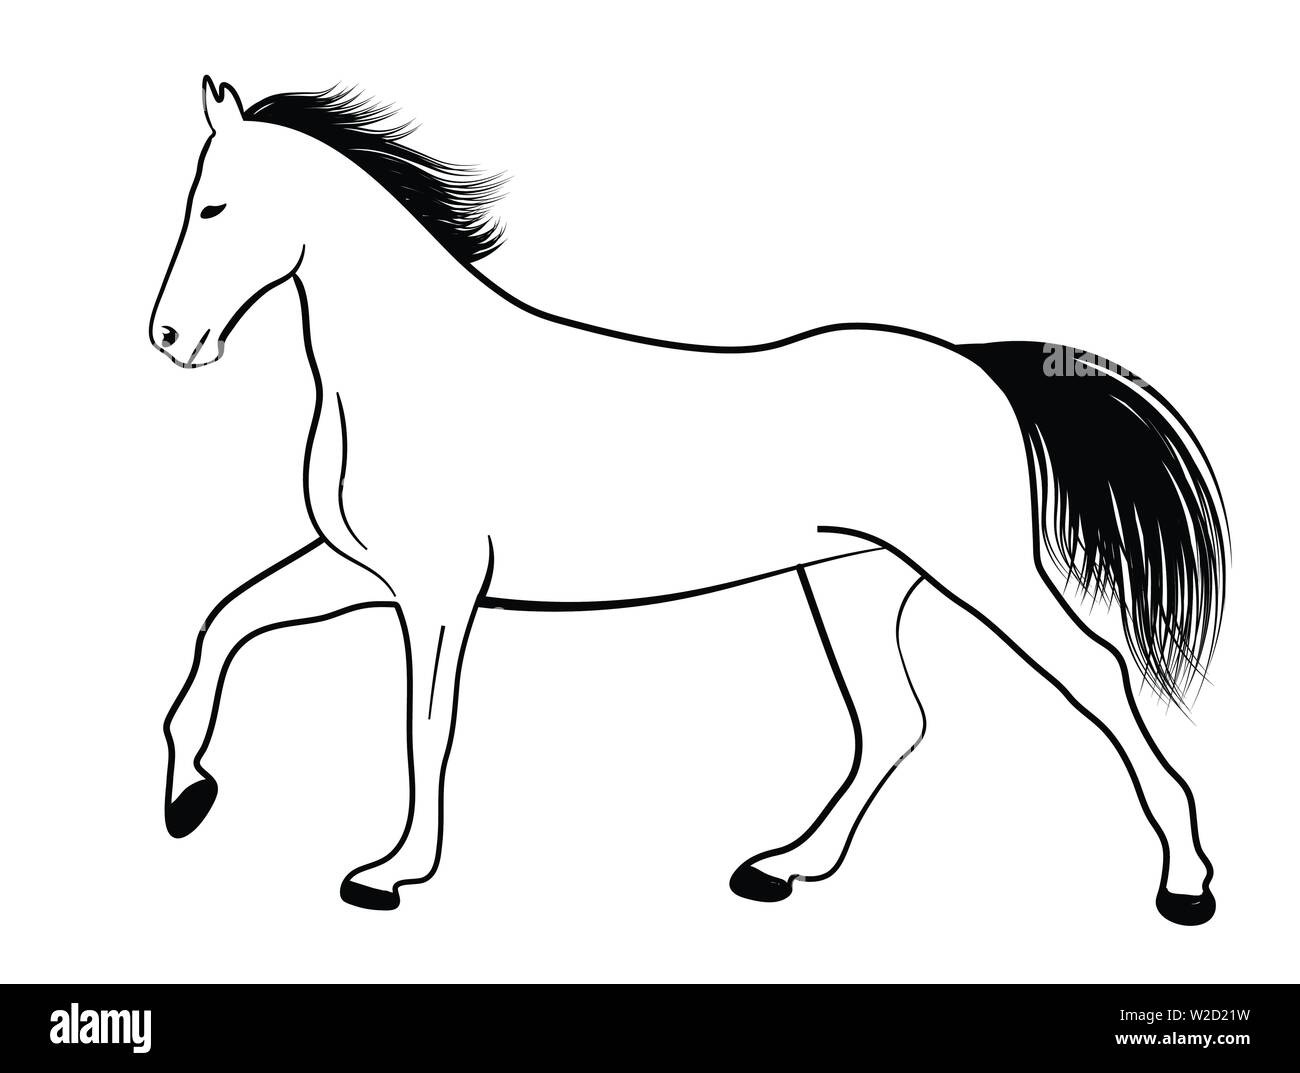 horse line art illustration - vector Stock Vector